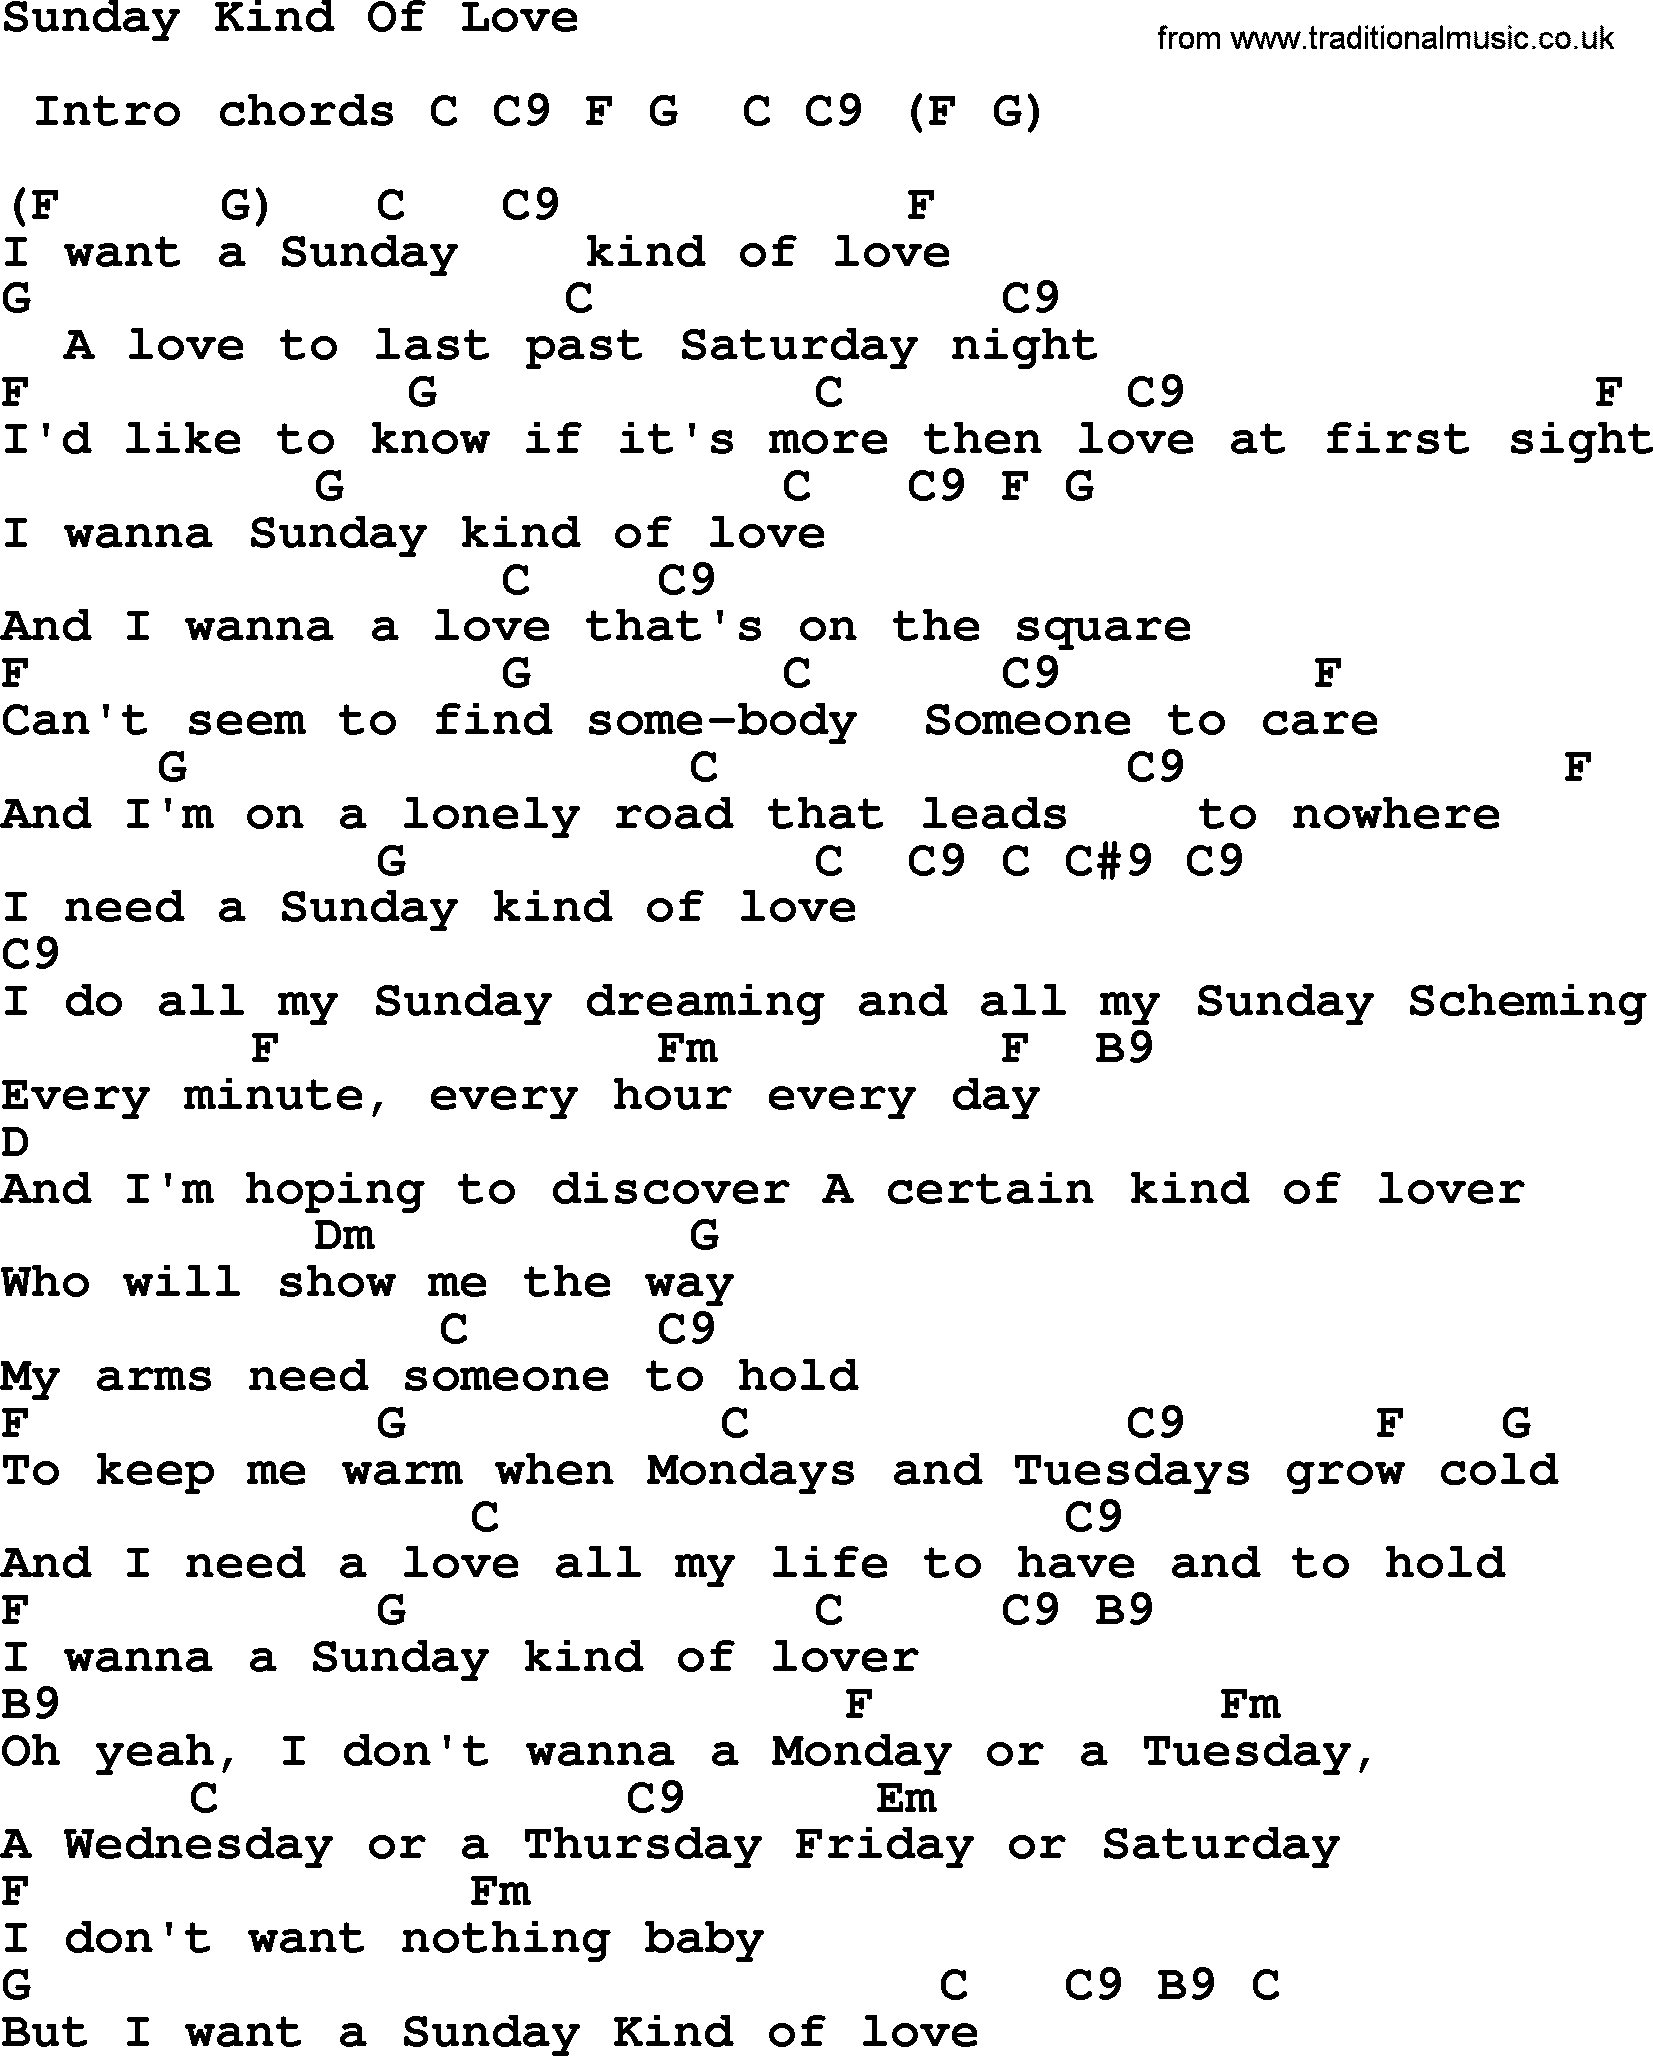 Reba McEntire song: Sunday Kind Of Love, lyrics and chords